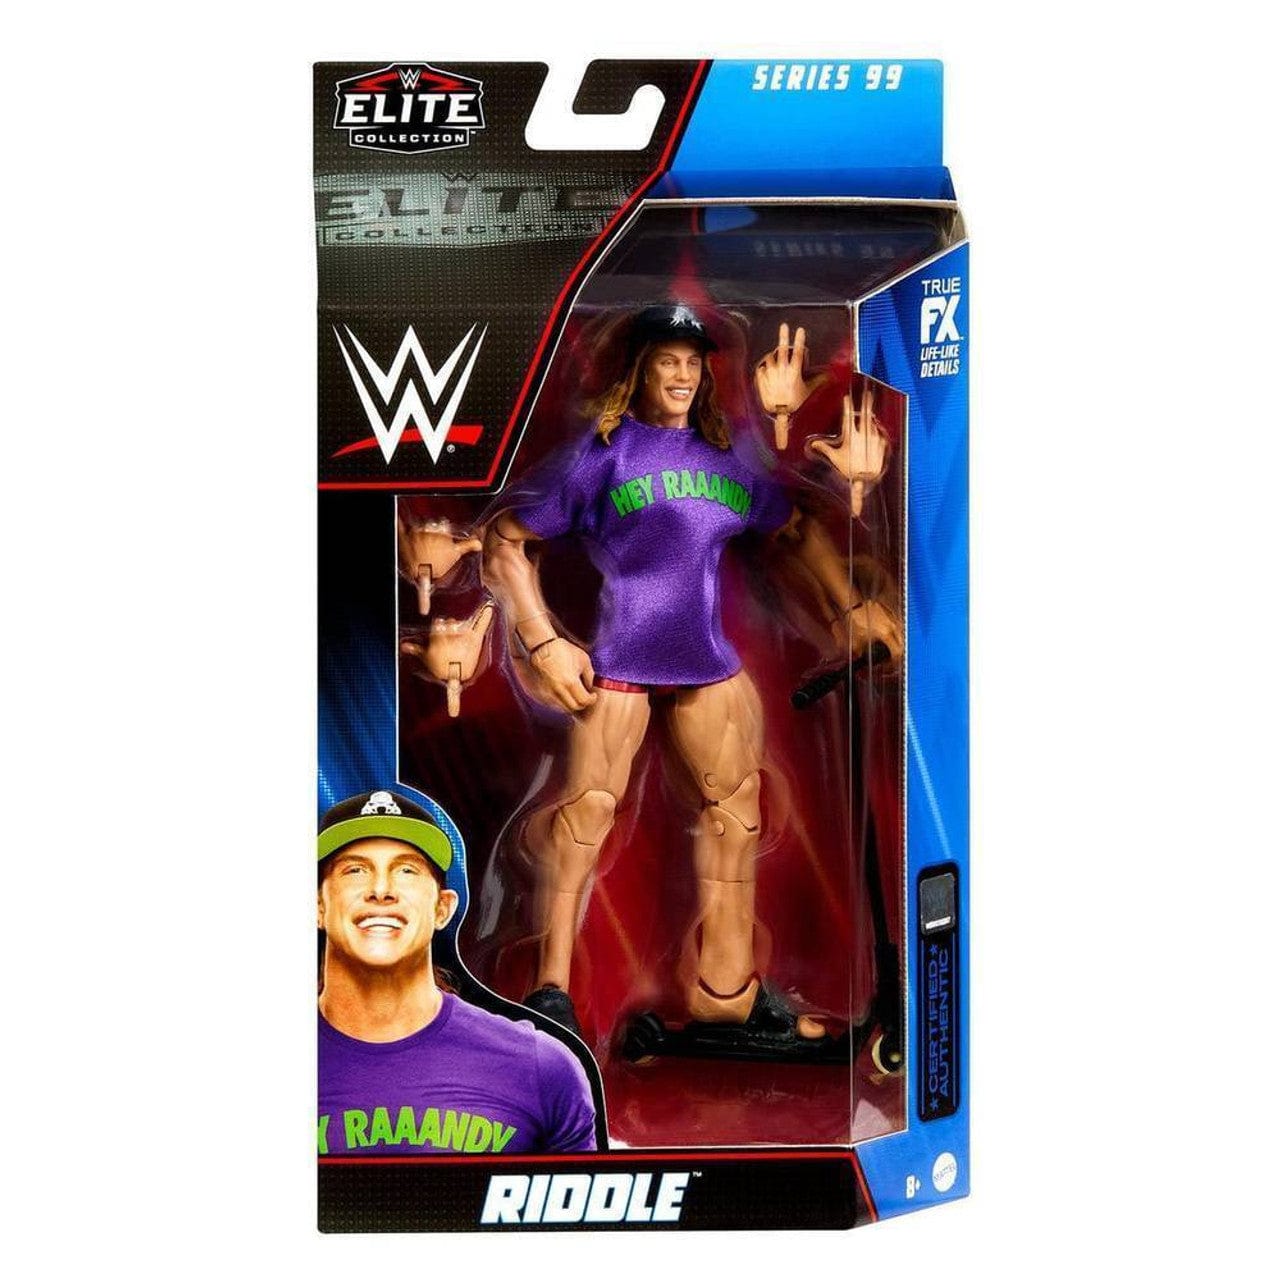 WWE Elite Collection Series 99 Matt Riddle Action Figure - Redshift7toys.com